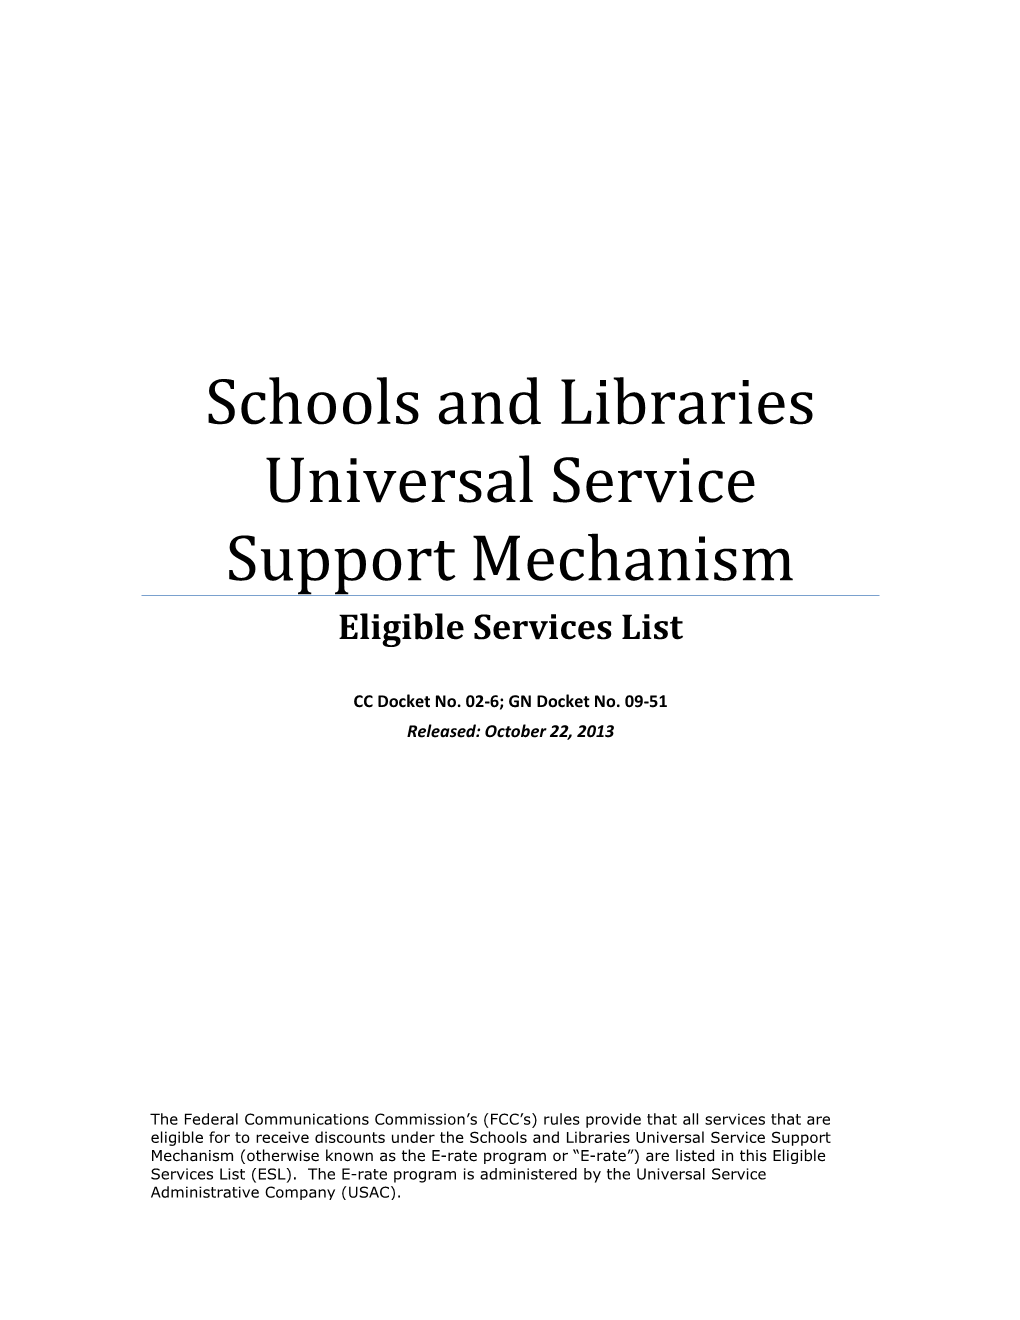 Eligible Services List